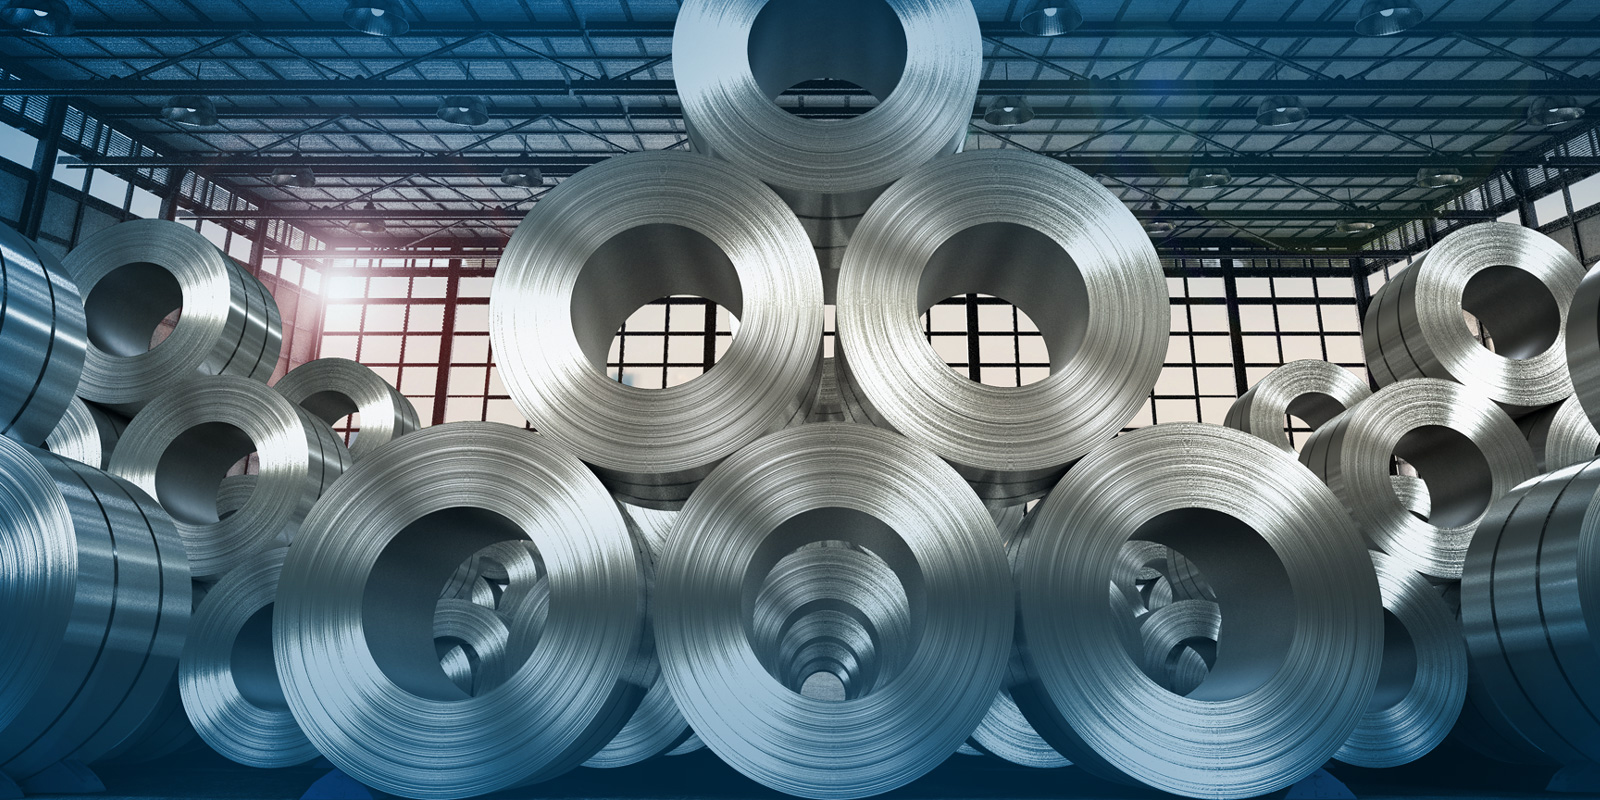 European Commission Announces Safeguard Investigation into Steel Imports